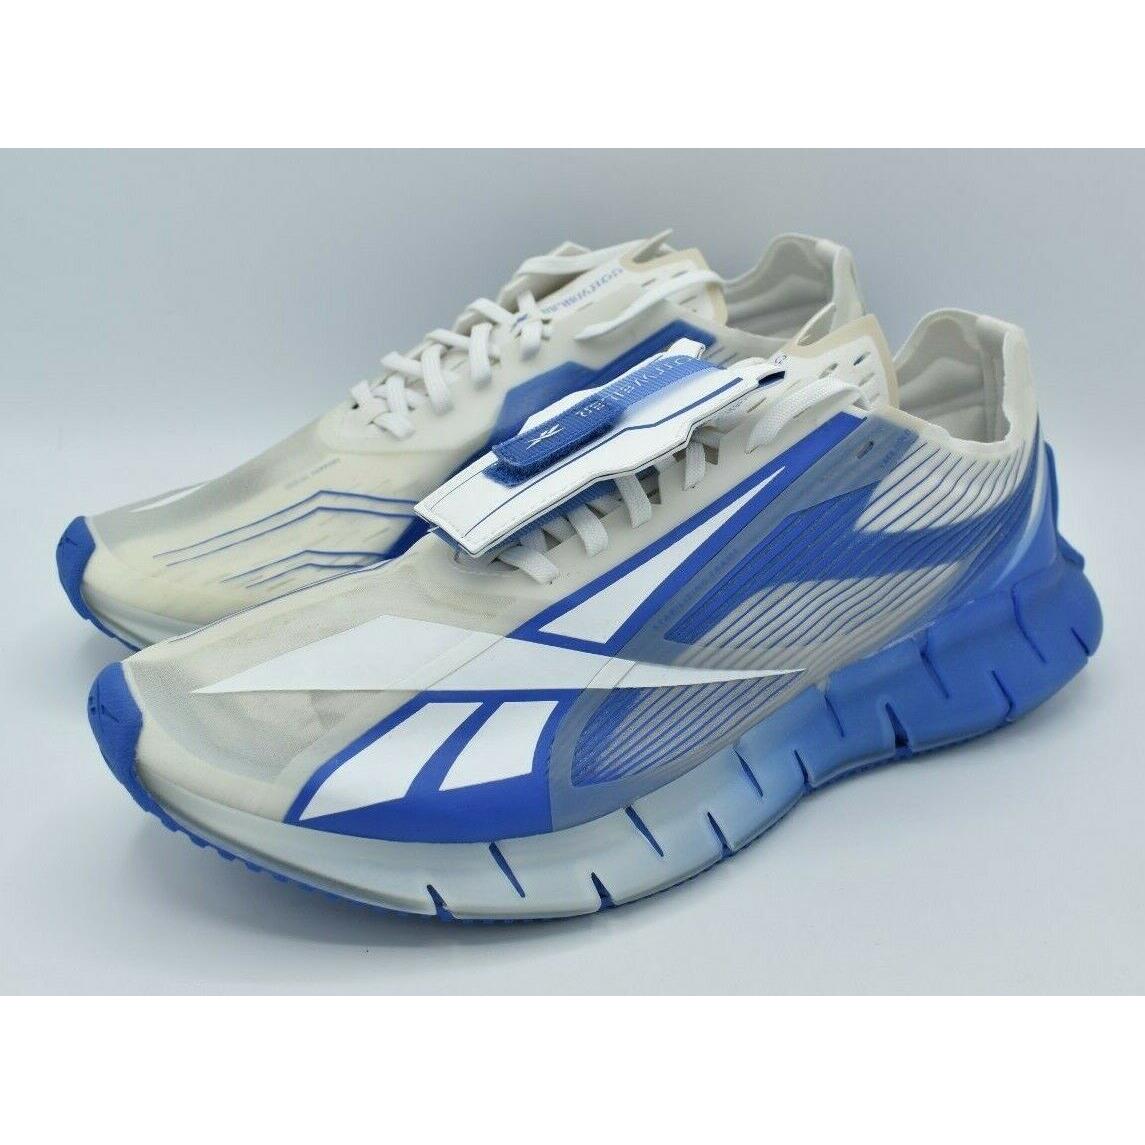 Reebok Mens Size 10.5 Cottweiler Zig 3D Storm X White Running Sneakers Shoes